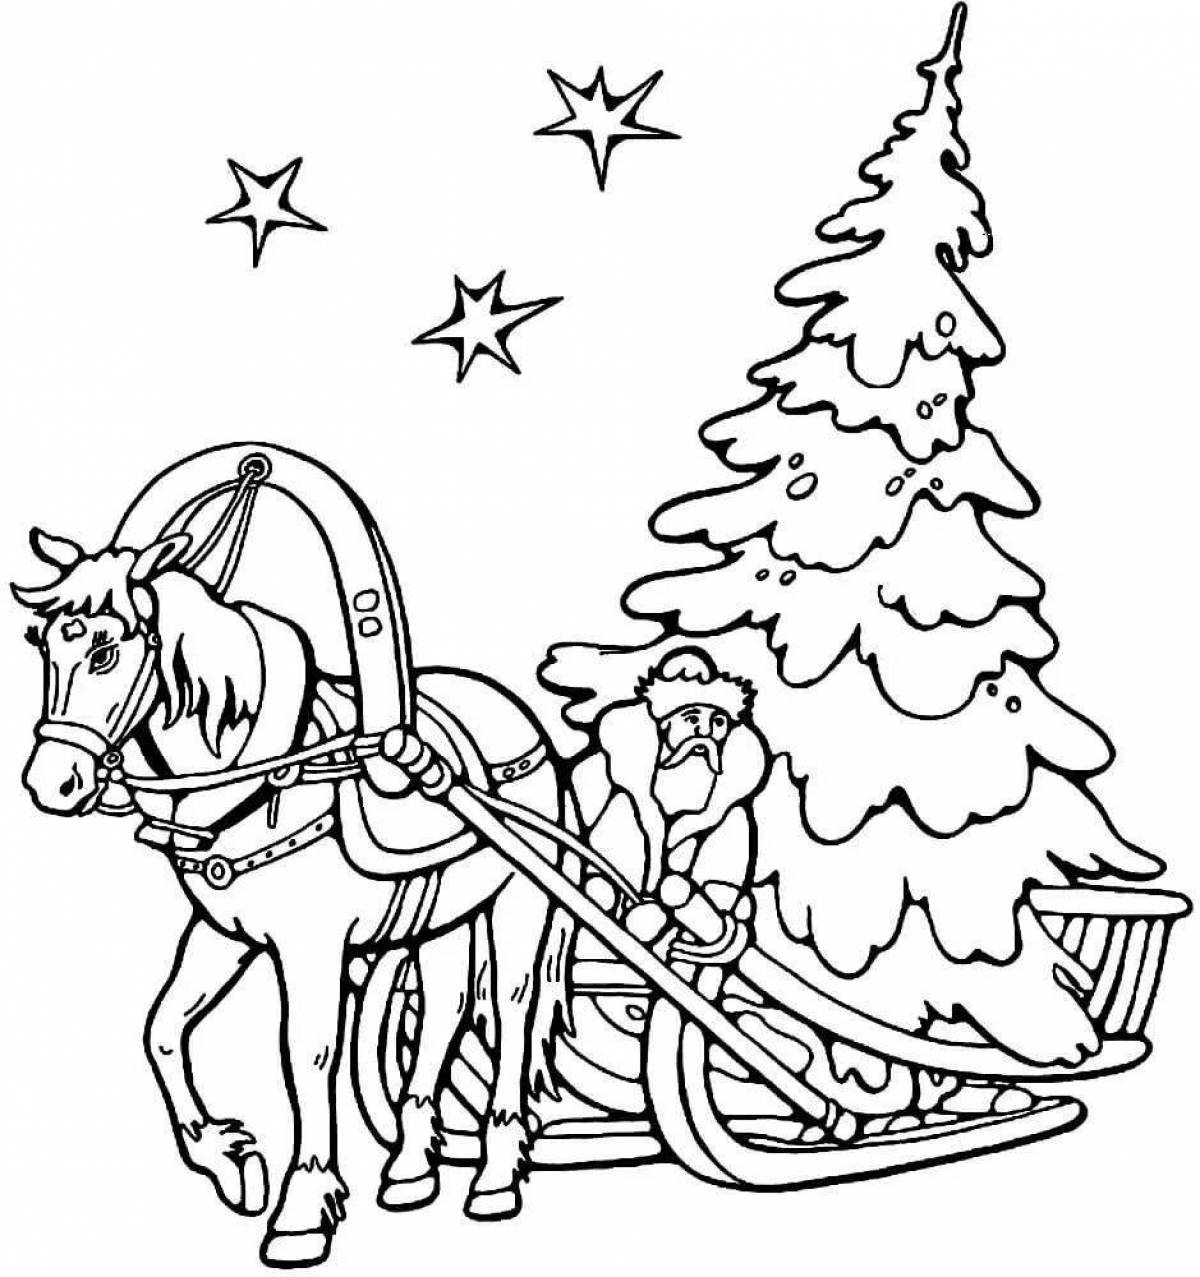 Coloring santa claus on a sleigh